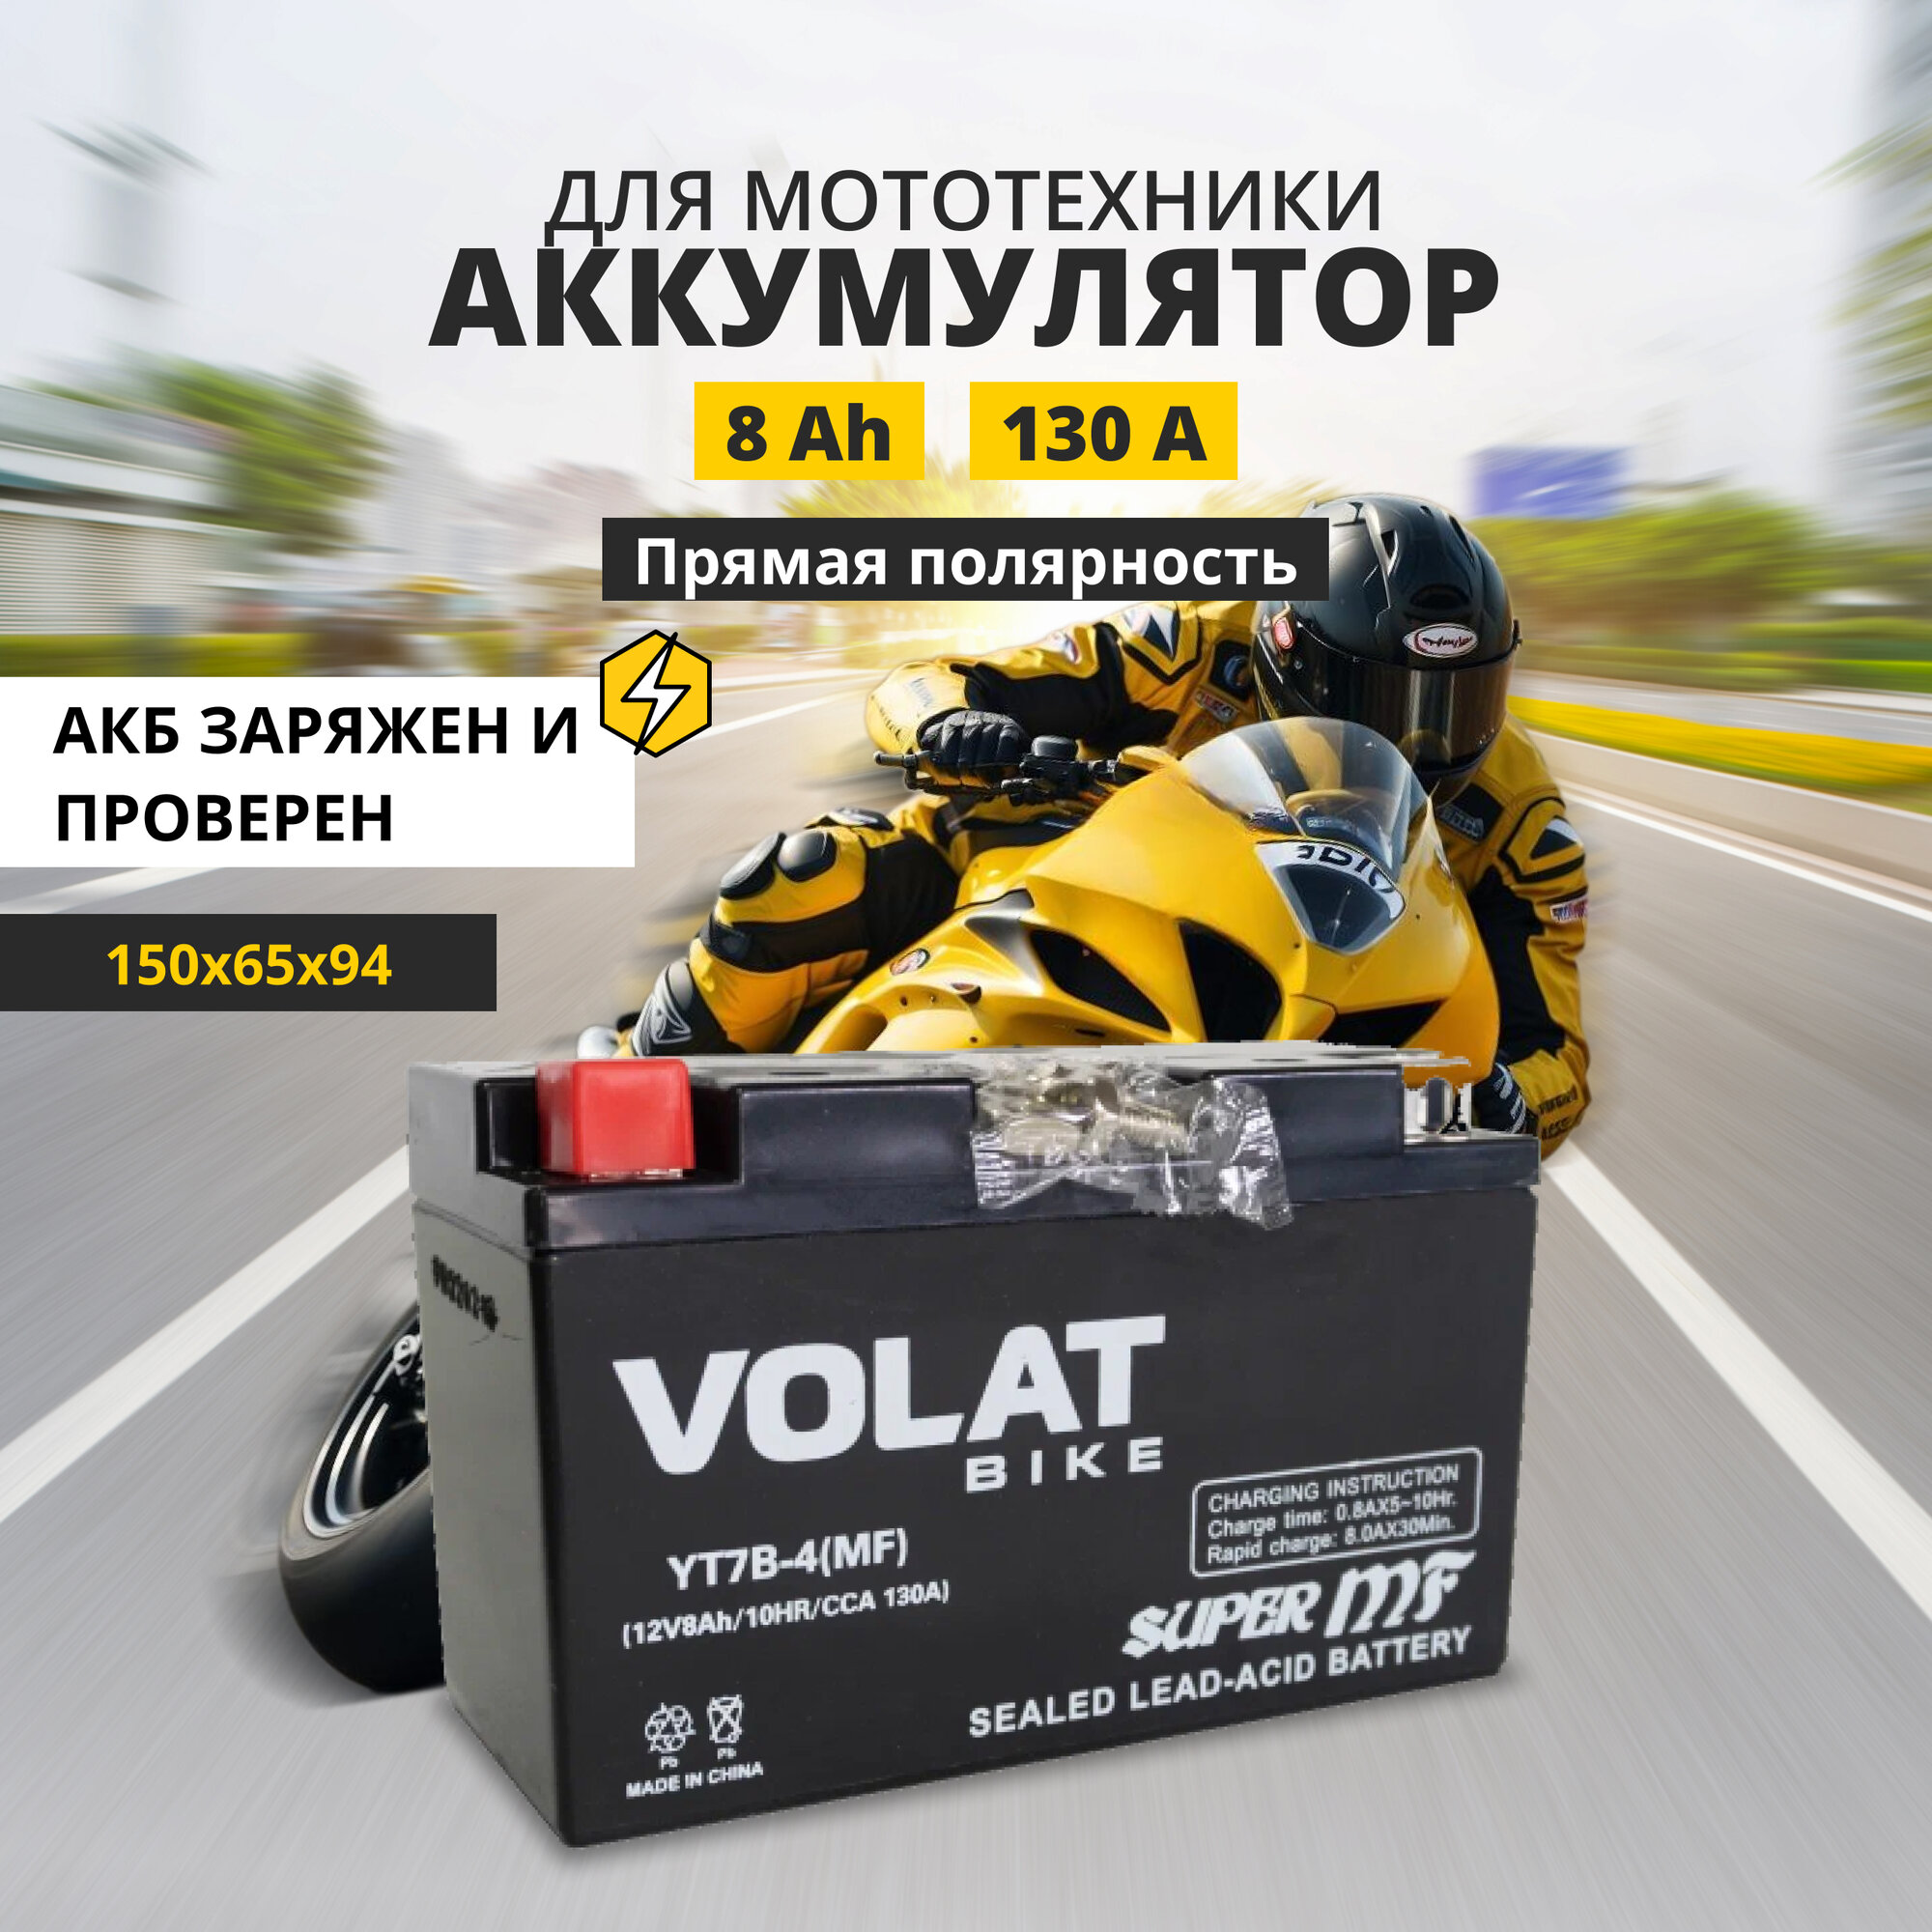 Аккумулятор для мотоцикла 12в 8 Ah 130 A прямая полярность VOLAT YT7B-4 (MF) акб для мототехники 12v AGM мопеда скутера квадроцикла 150x65x94